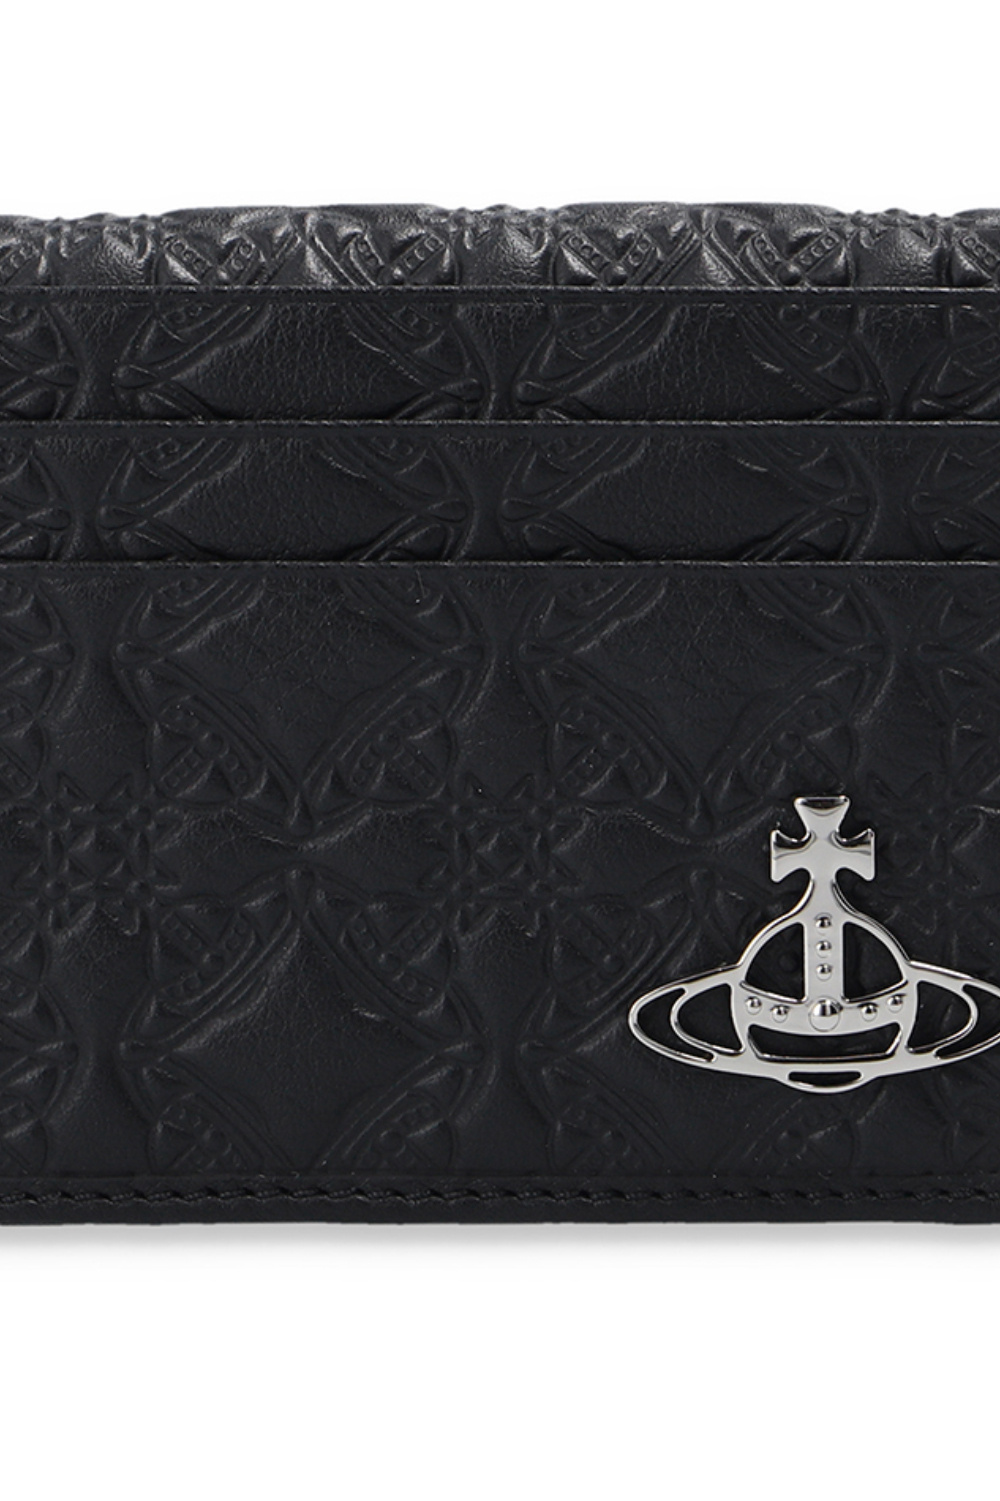 Vivienne Westwood ‘Geroge’ leather card holder with logo